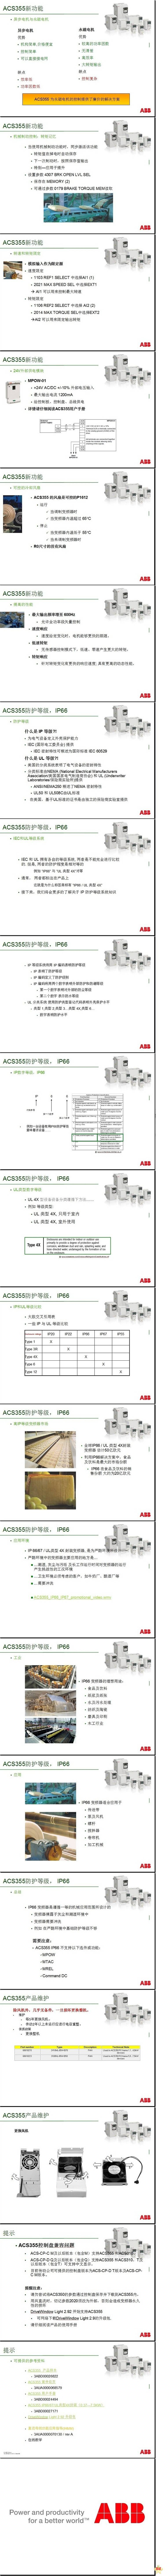 ABB 变频器 机械传动 单相 220V ACS355-01E-09A8-2 变频器,机械传动,微型传动,ACS355,ABB